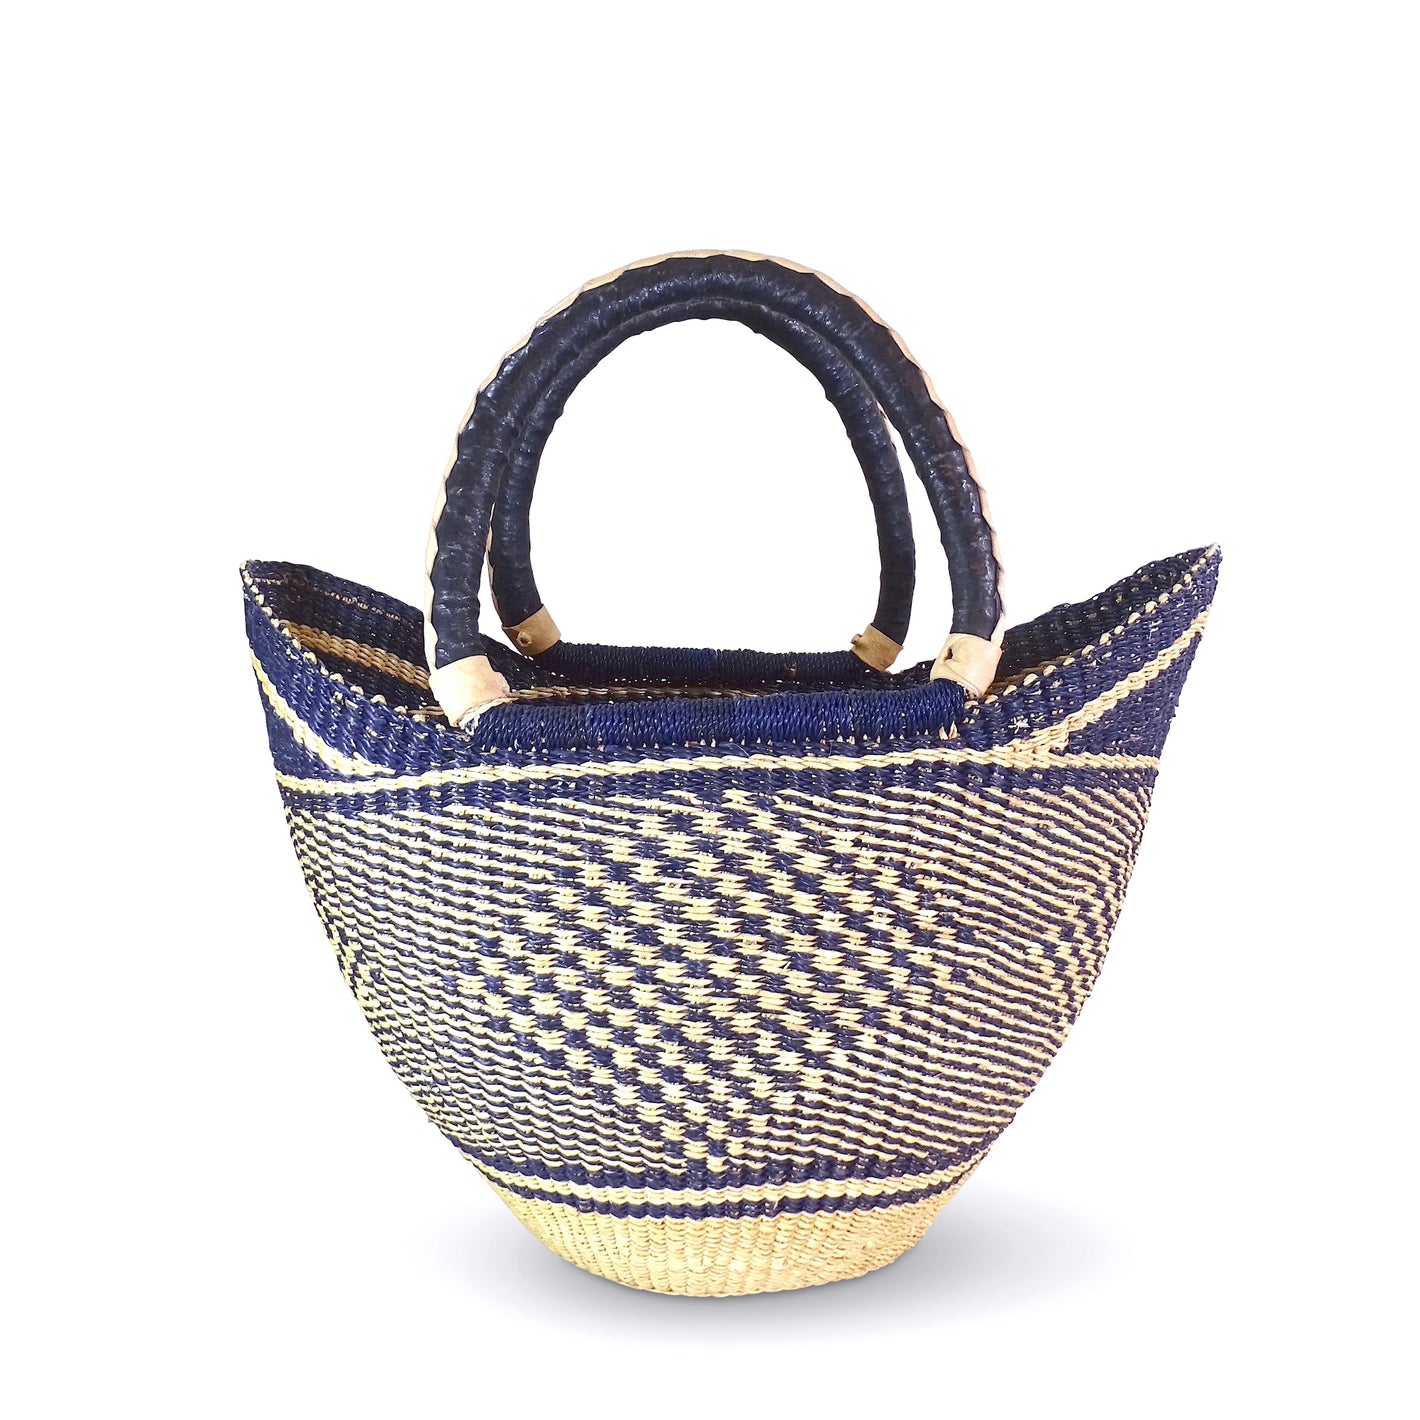 Baskets from Ghana – Ti-a Woven Goods